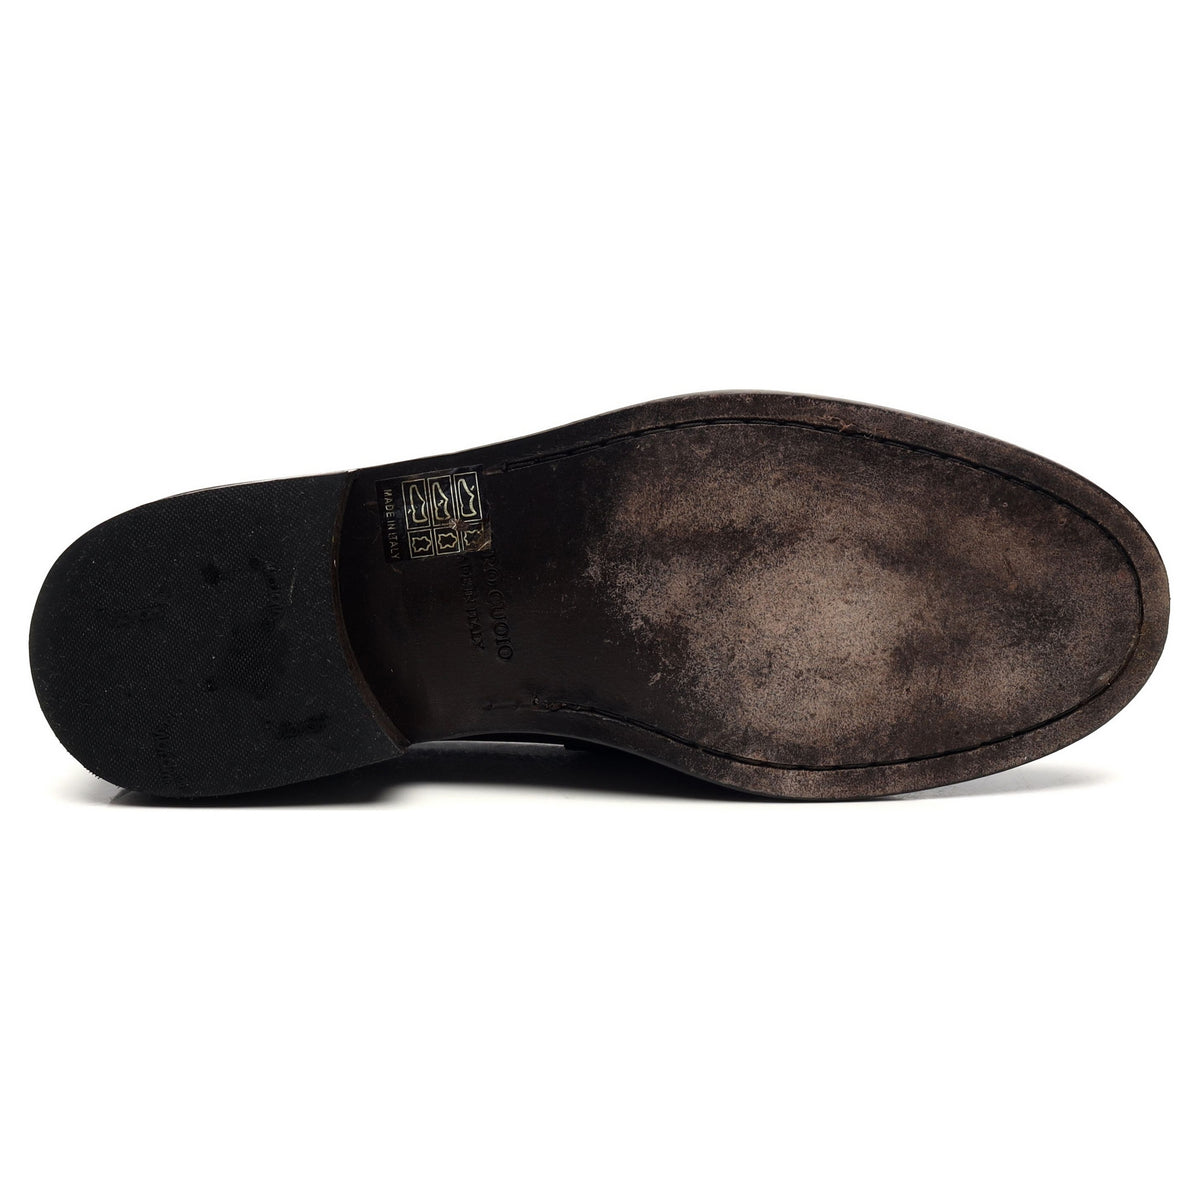 Dark Brown Leather Loafers UK 7 EU 41